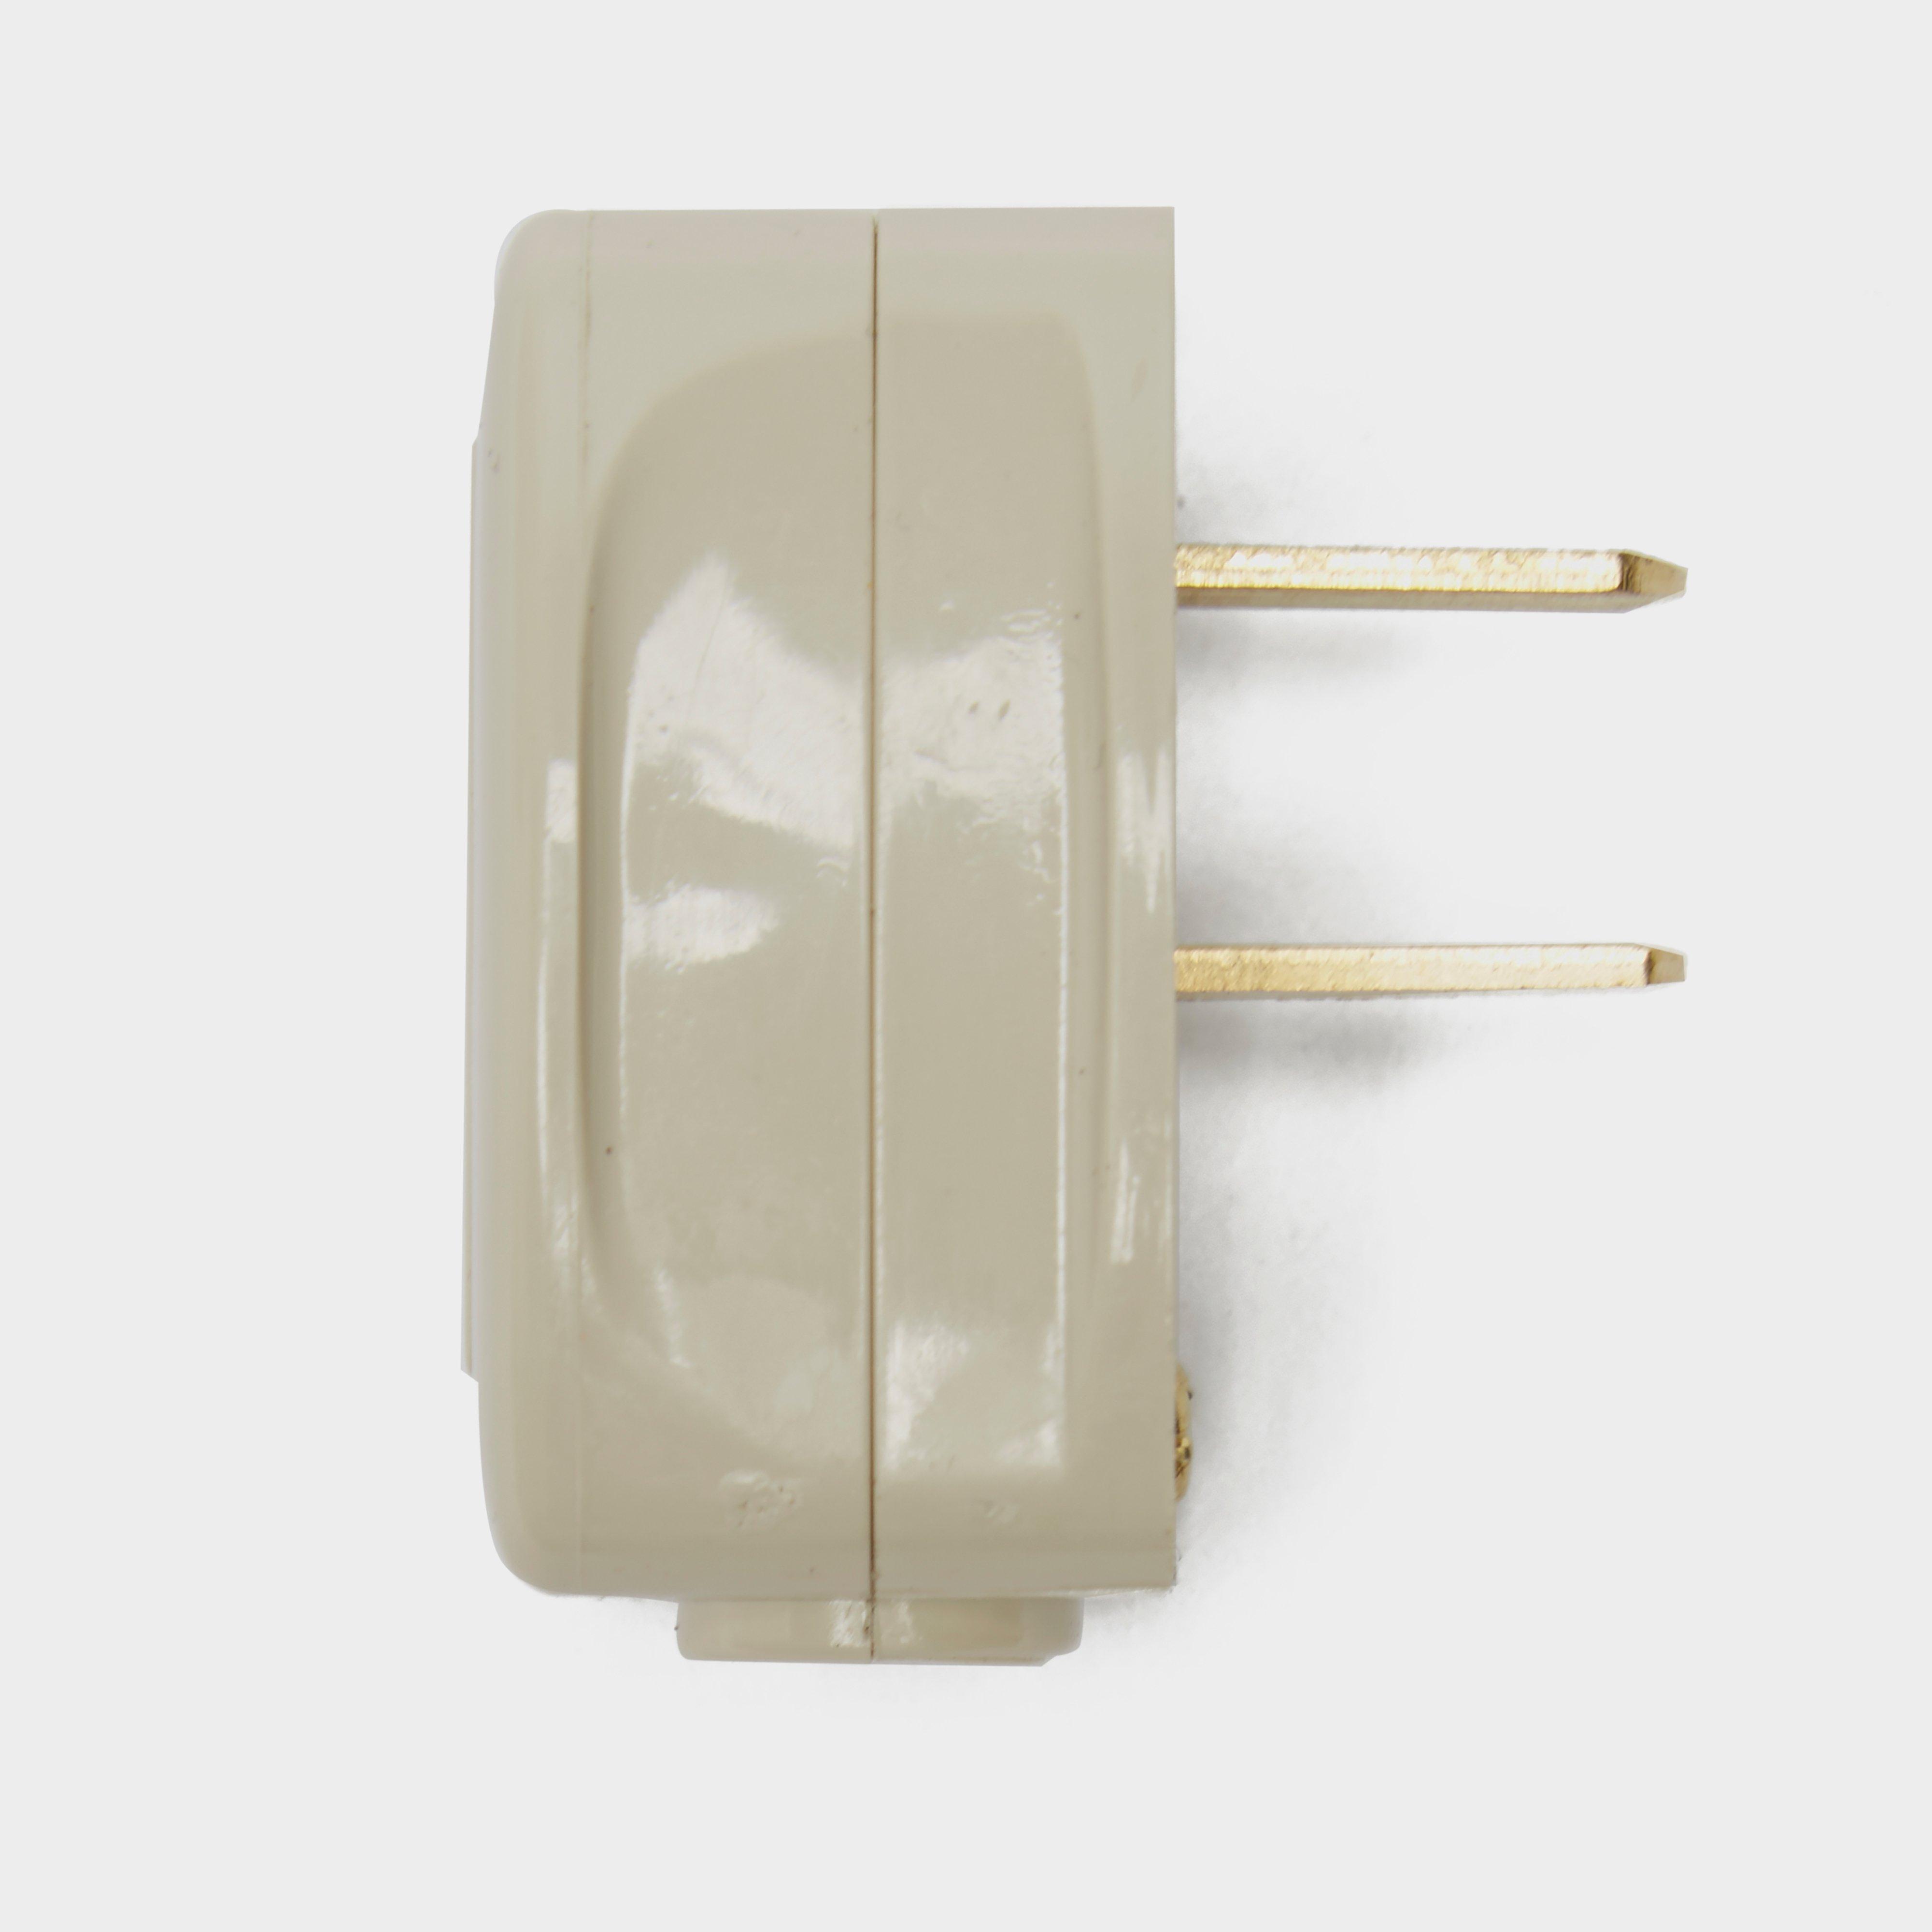 W4 Clipsal 2-pin 12v Plug - Cream/plug  Cream/plug